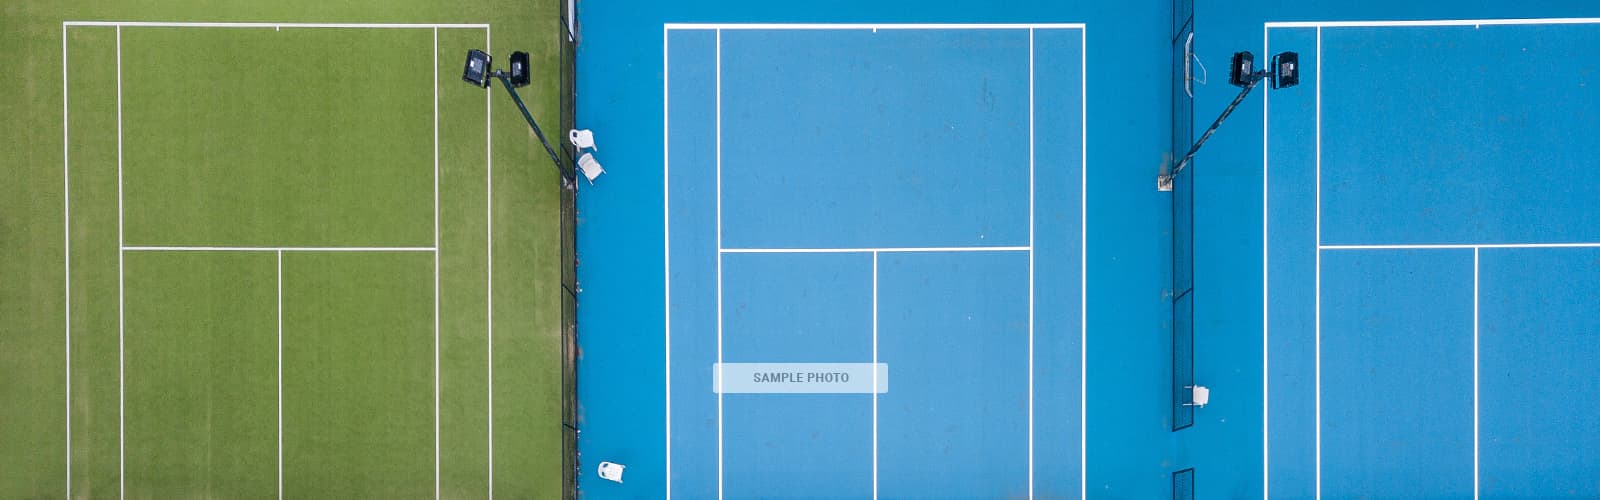 Southeast High School Tennis Courts in Bradenton Florida